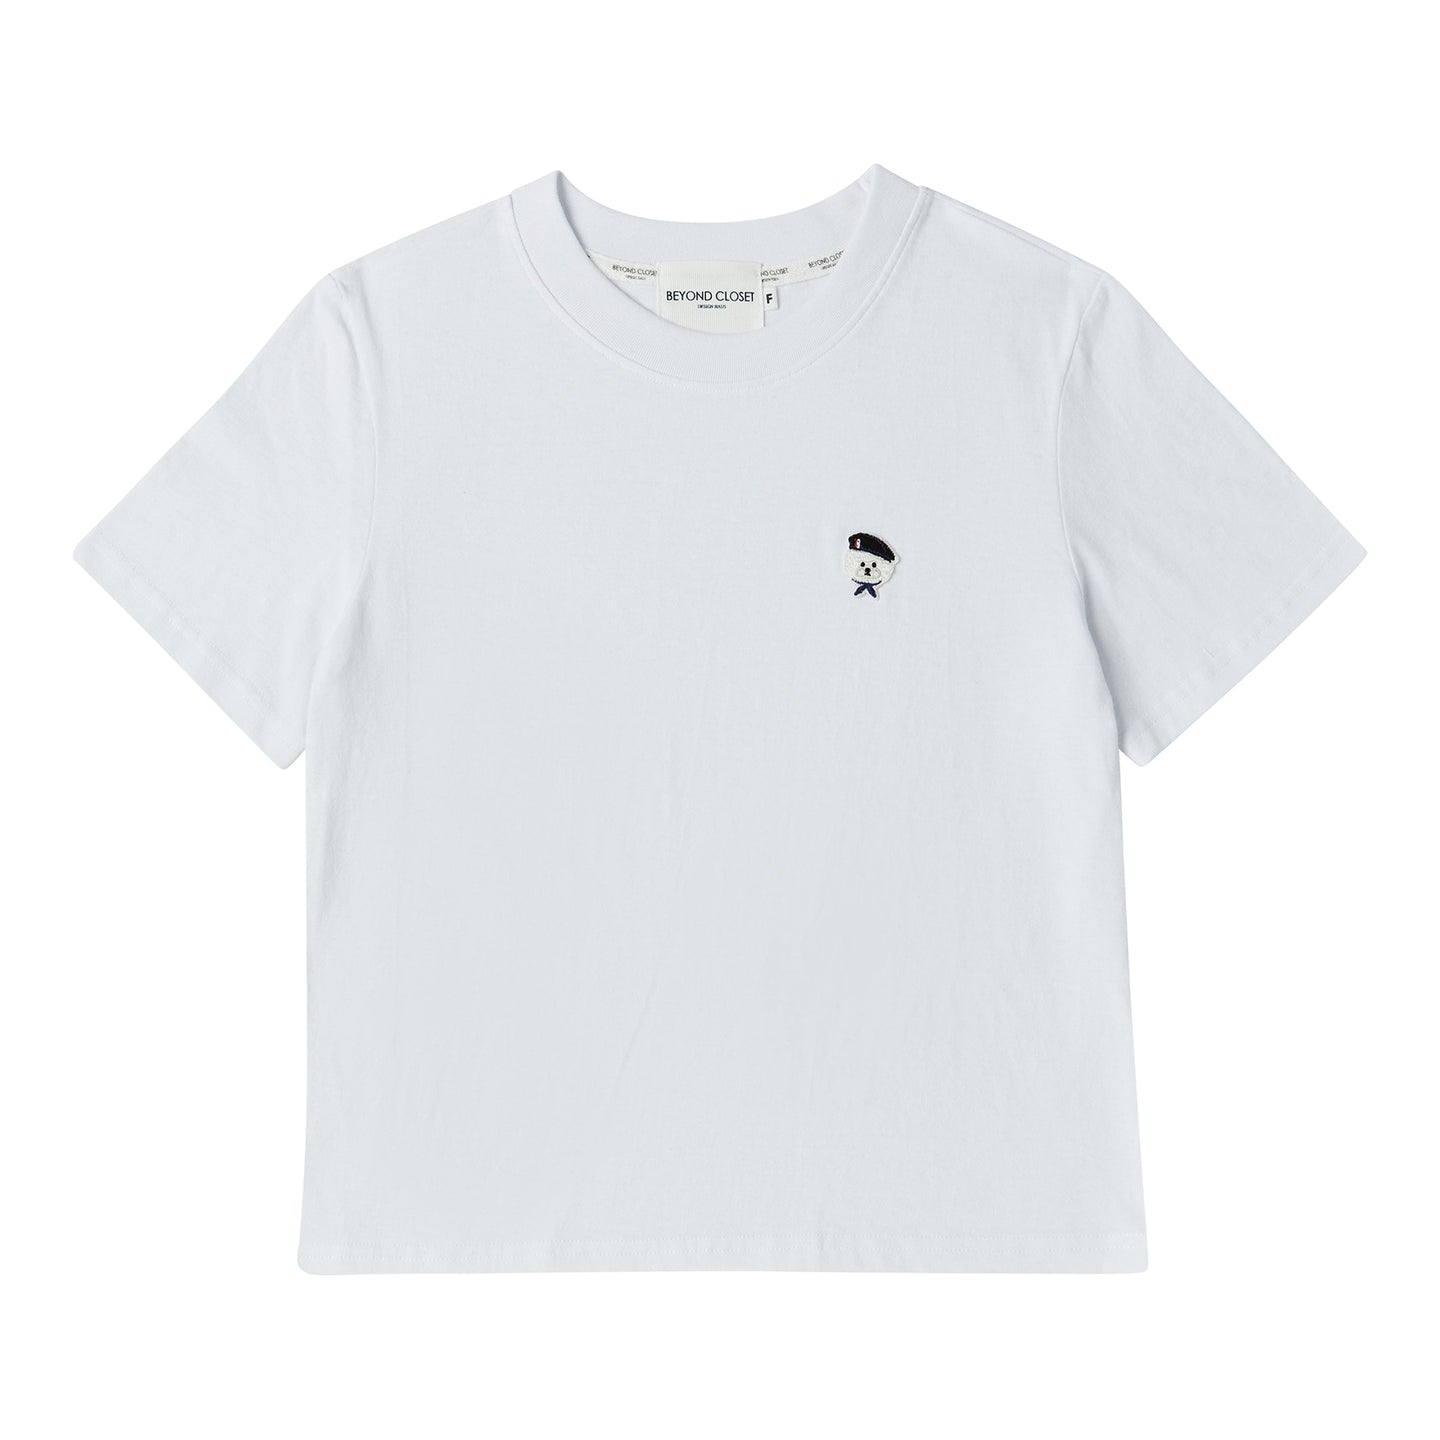 BEYOND CLOSET Womens Edition New Parisian T-Shirt White